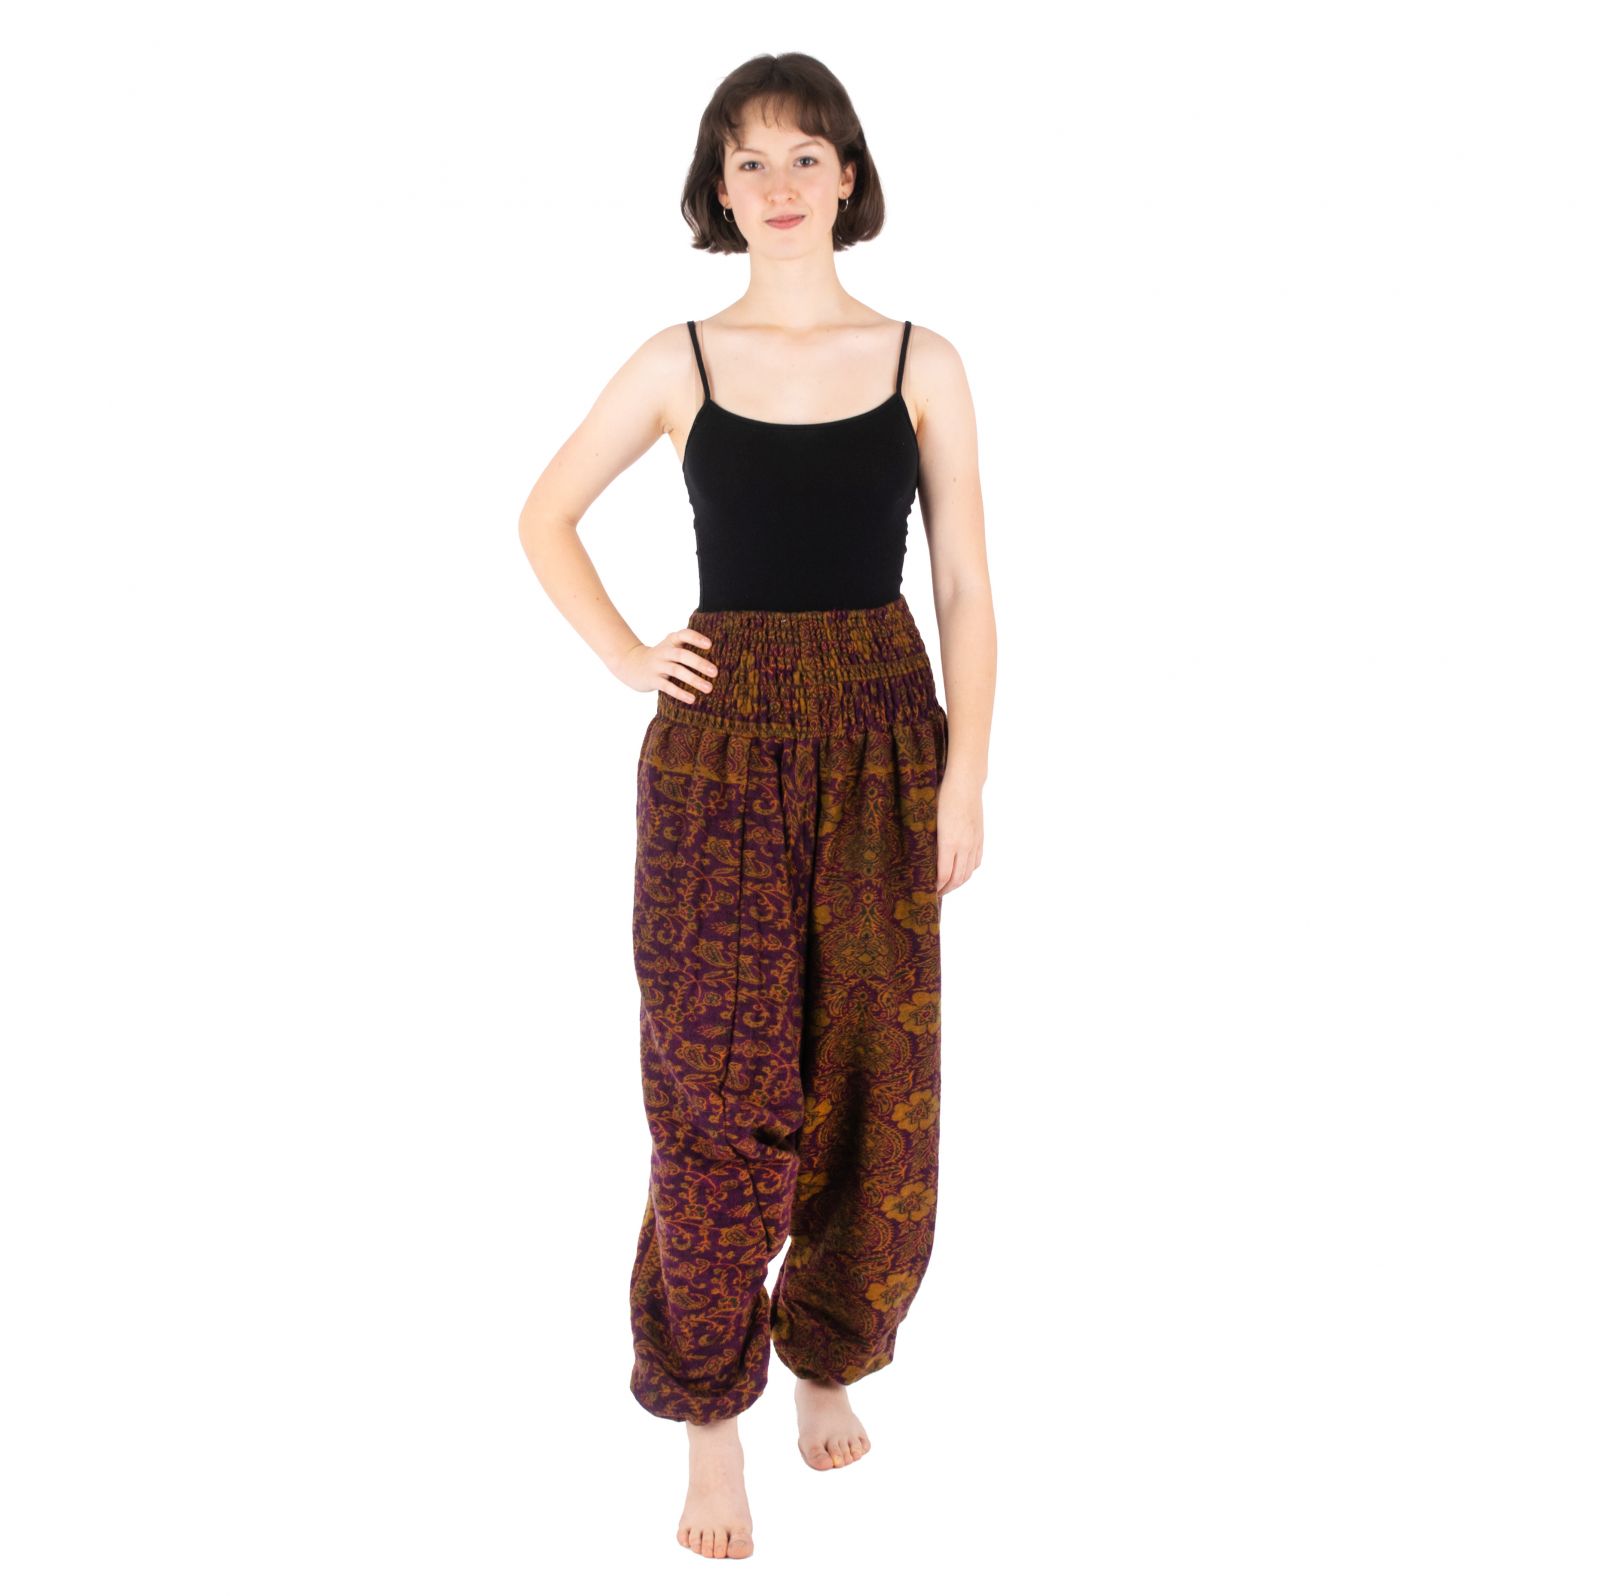 Pantaloni turchi in acrilico caldo Jagrati Kiyana India